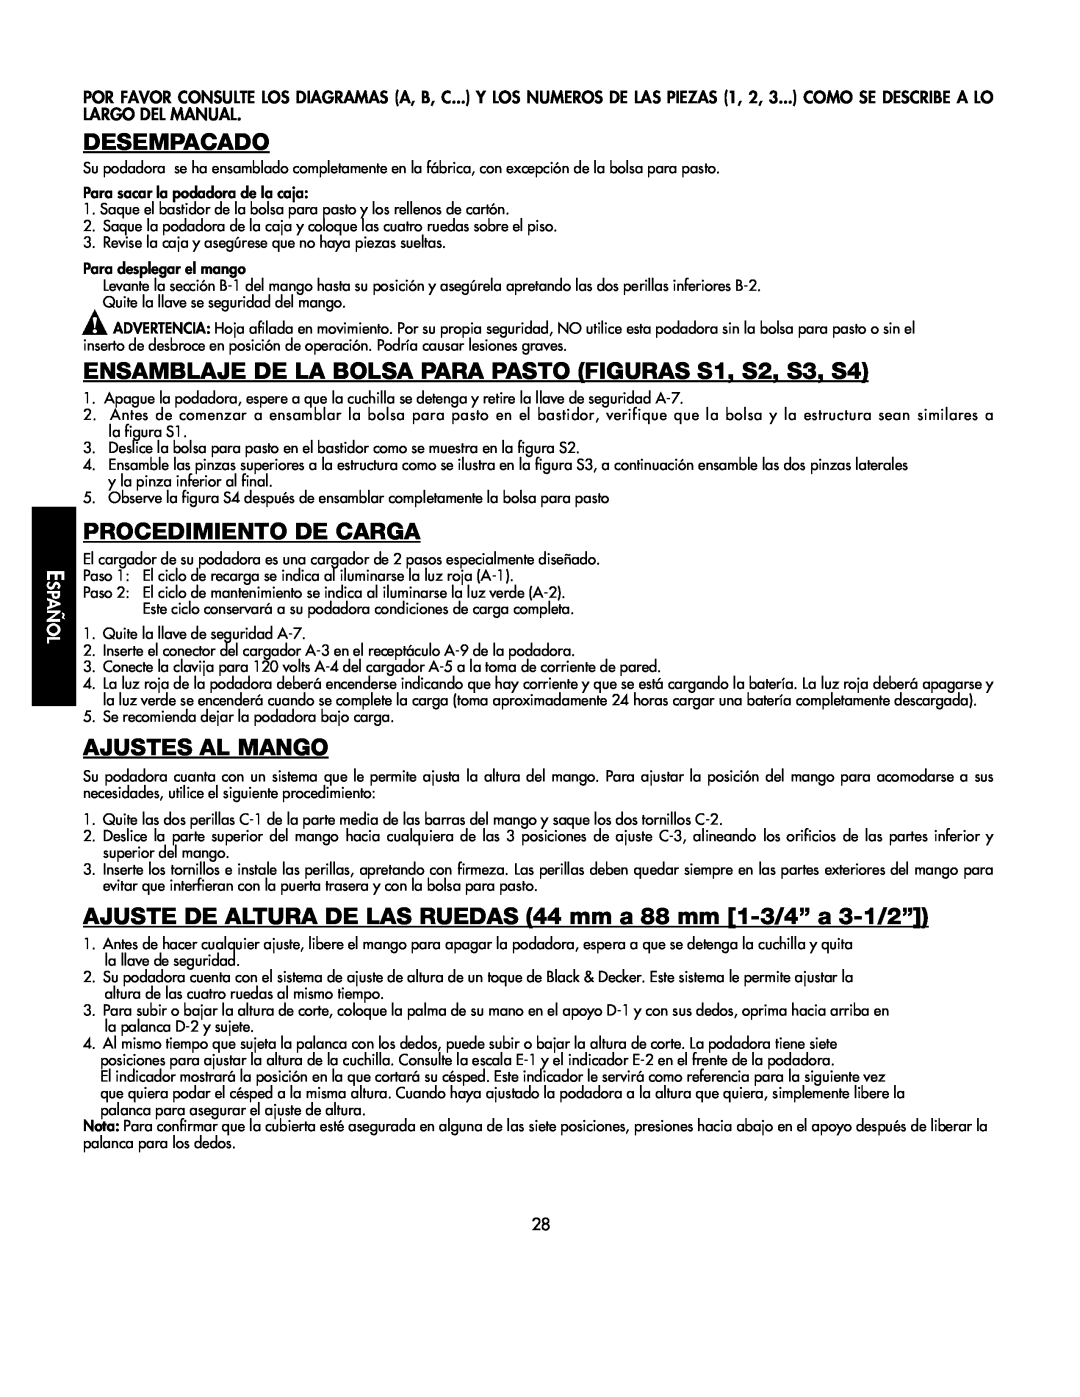 Black & Decker 598968-00 Desempacado, ENSAMBLAJE DE LA BOLSA PARA PASTO FIGURAS S1, S2, S3, S4, Procedimiento De Carga 